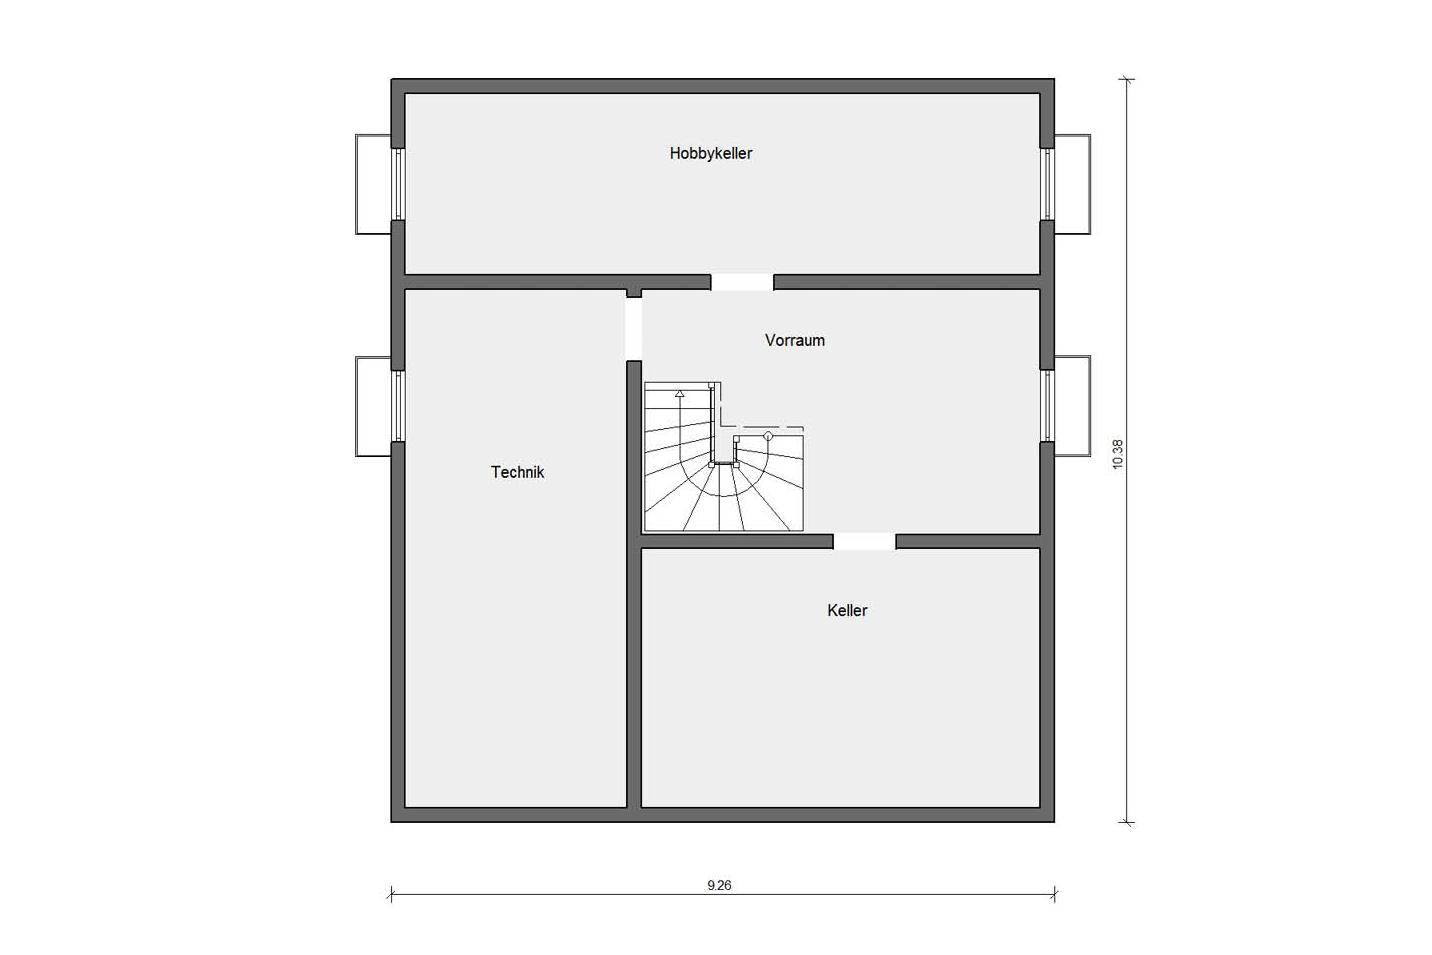 Floor plan basement E 15-142.5 Country prefab house